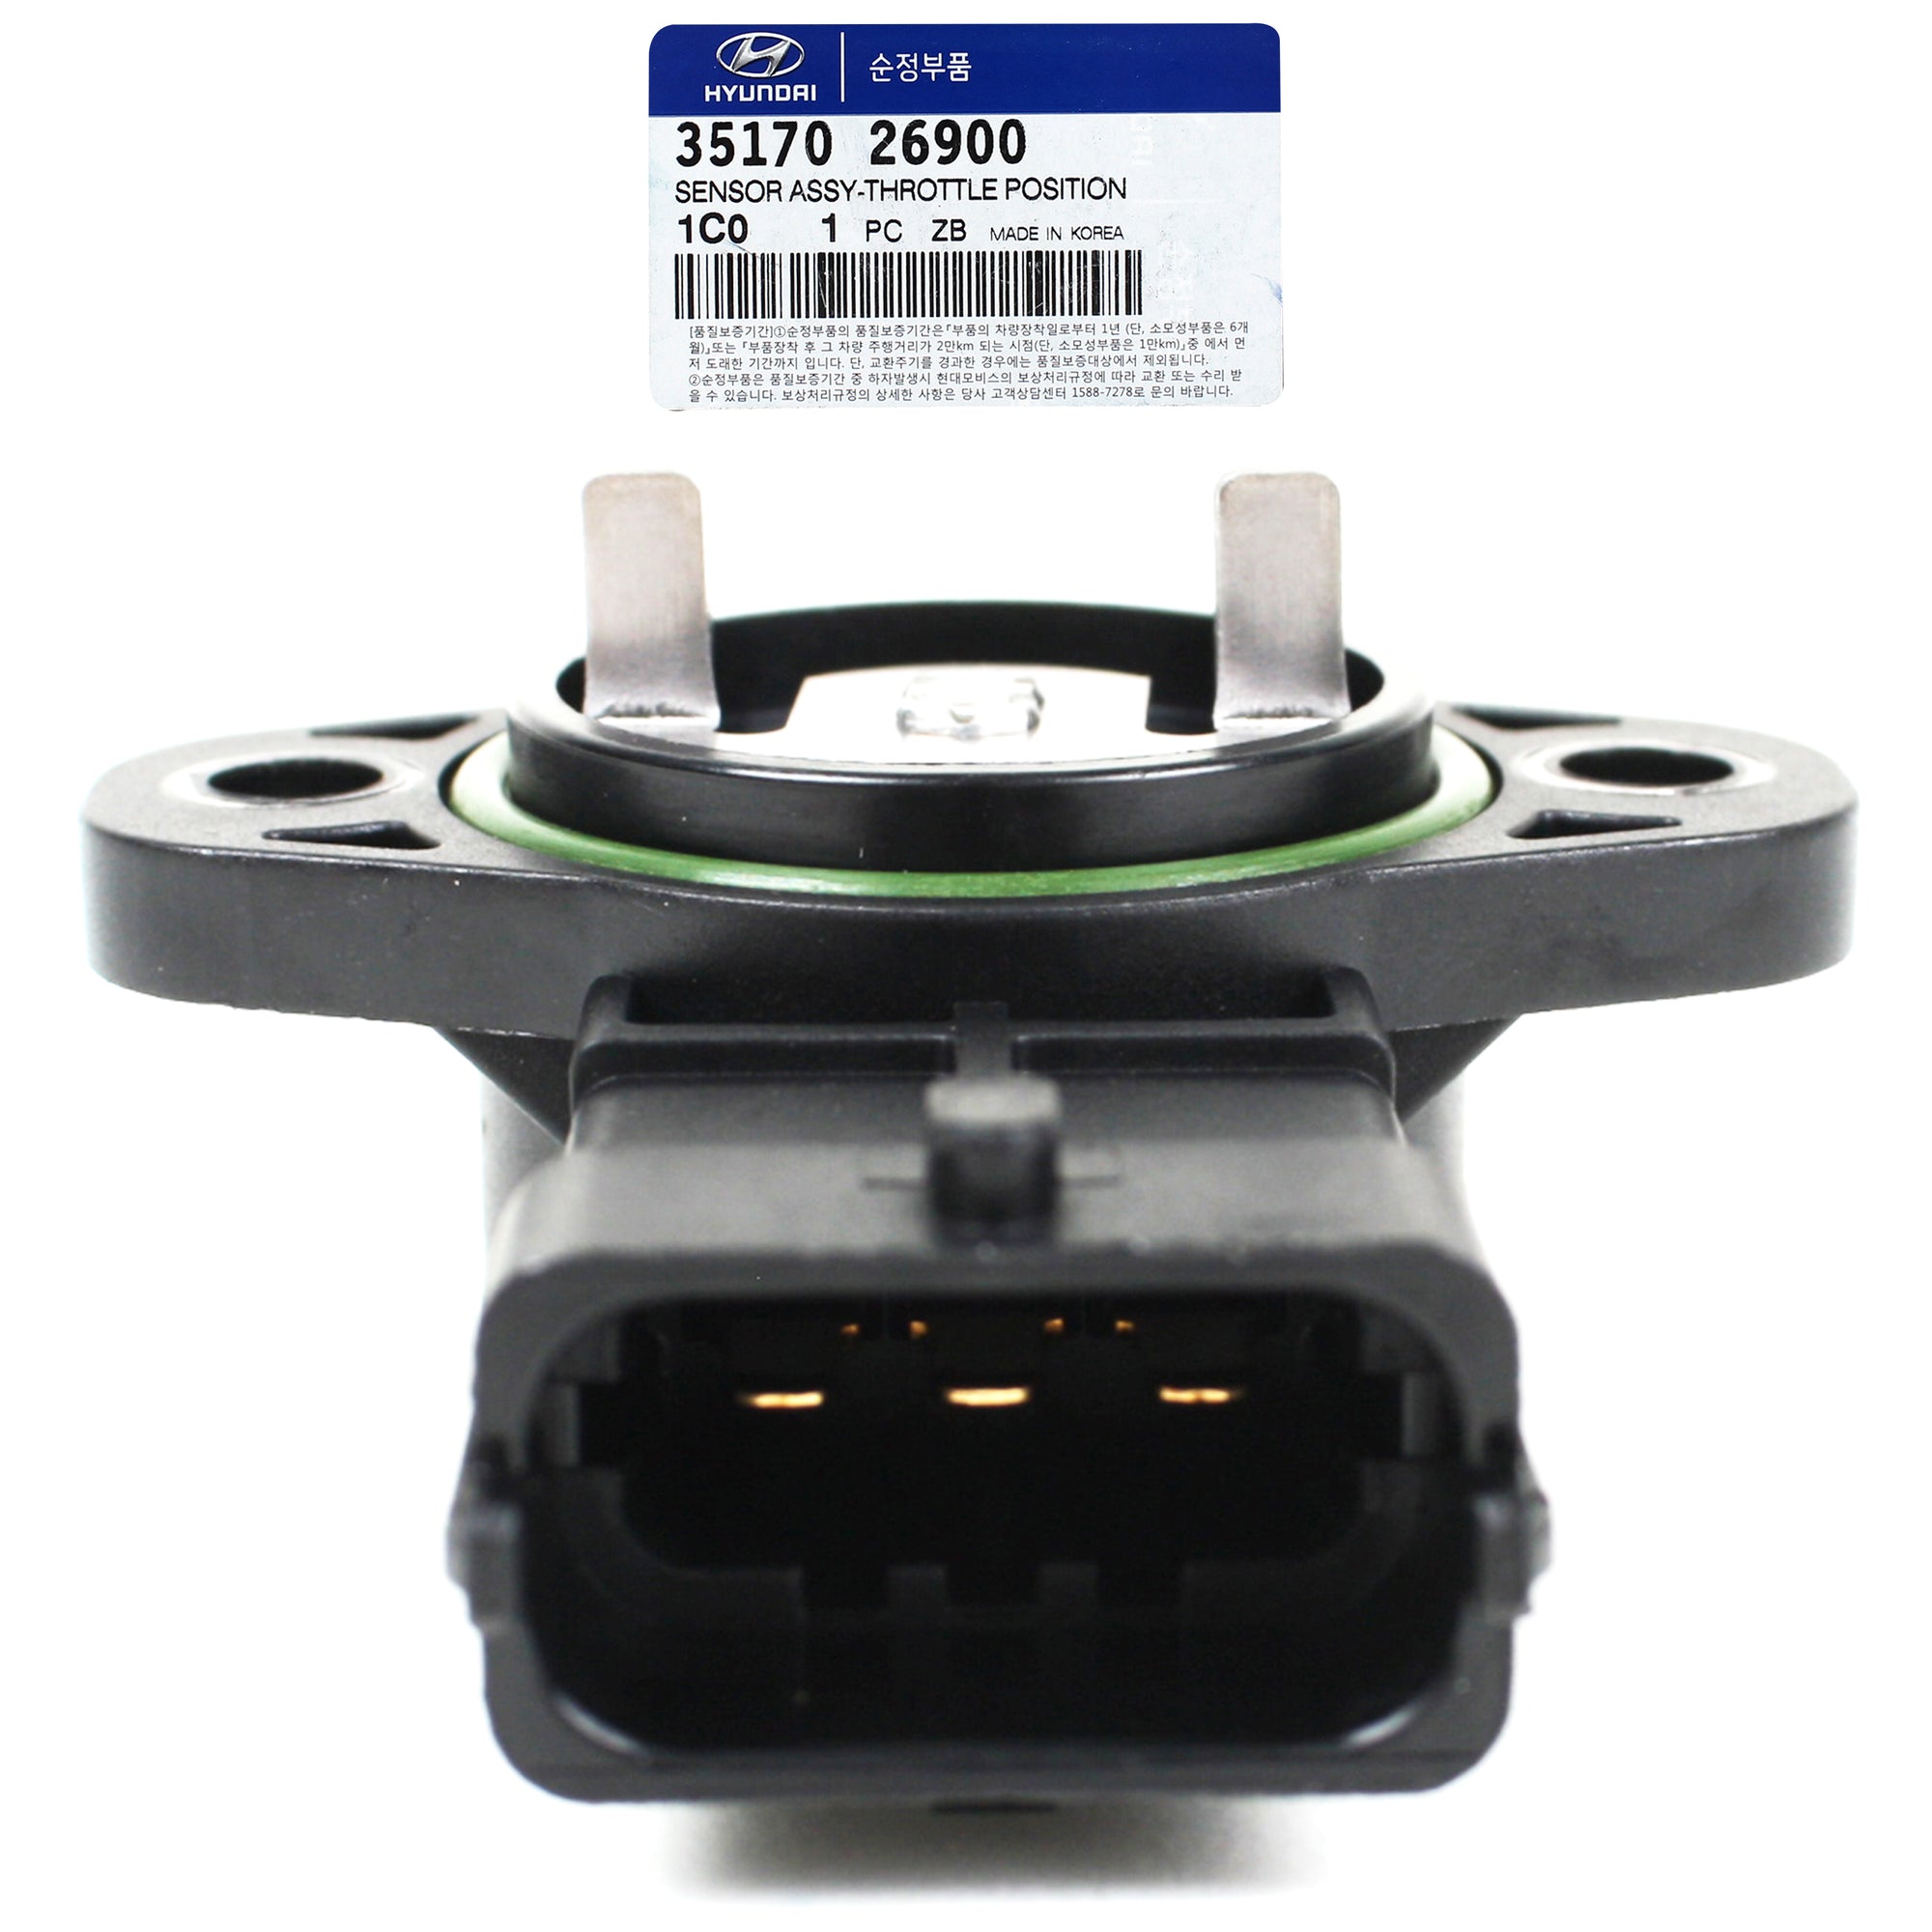 GENUINE Throttle Position Sensor for 06-11 Hyundai Accent Kia Rio 3517026900